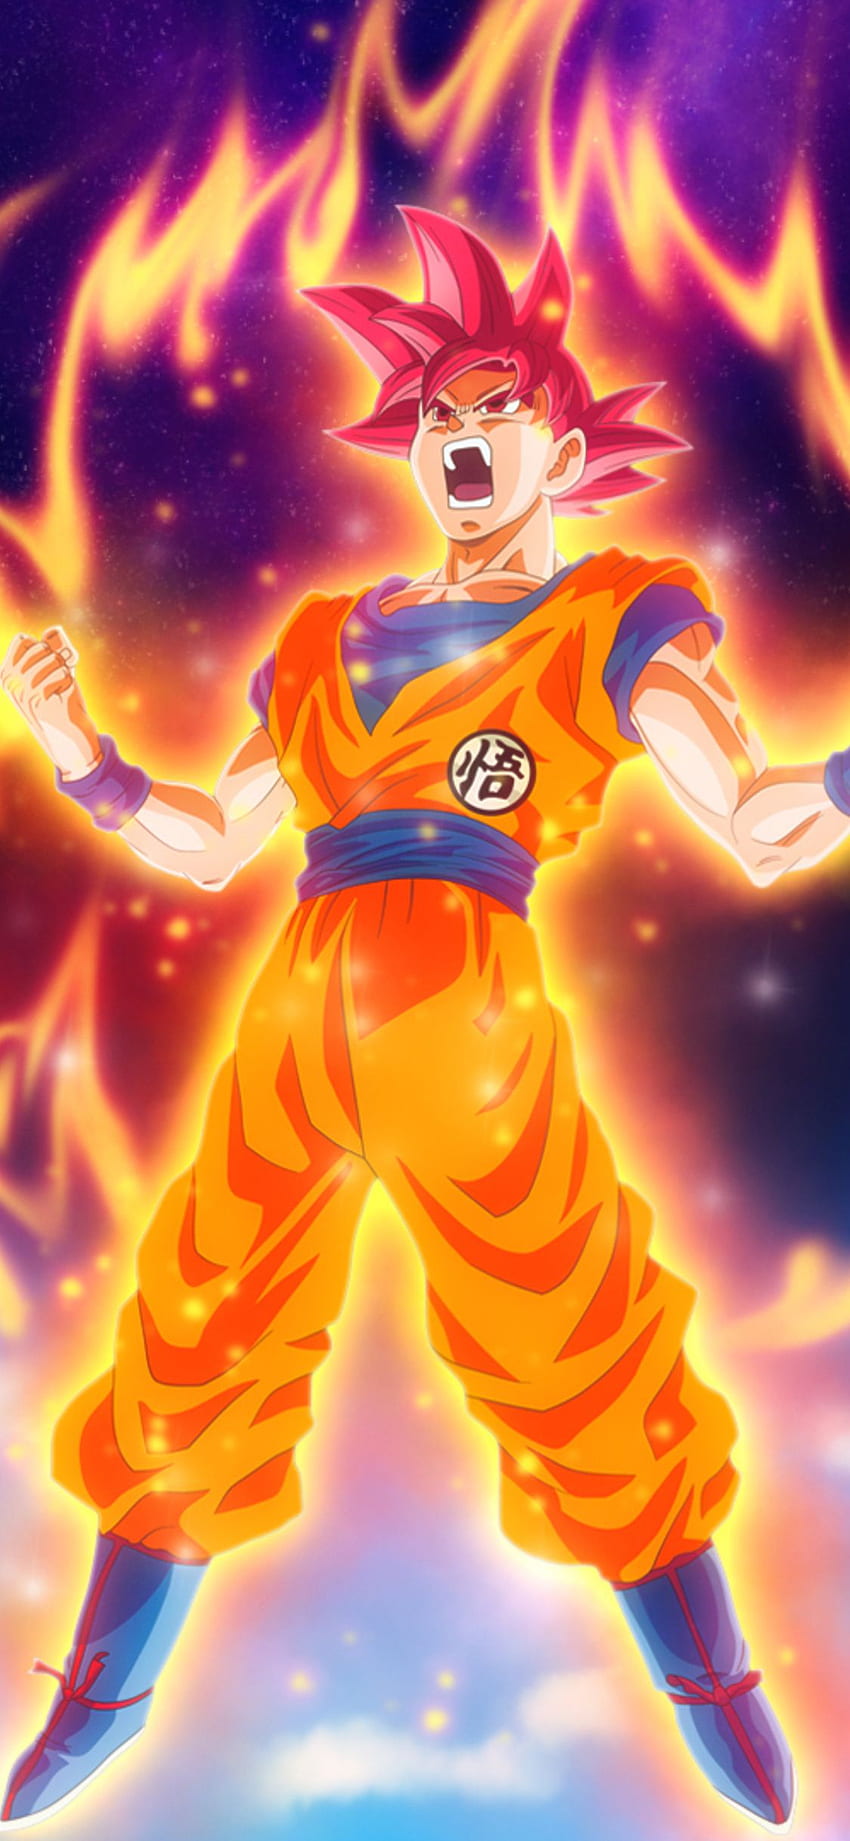 Little Son Goku on black background HD wallpaper download